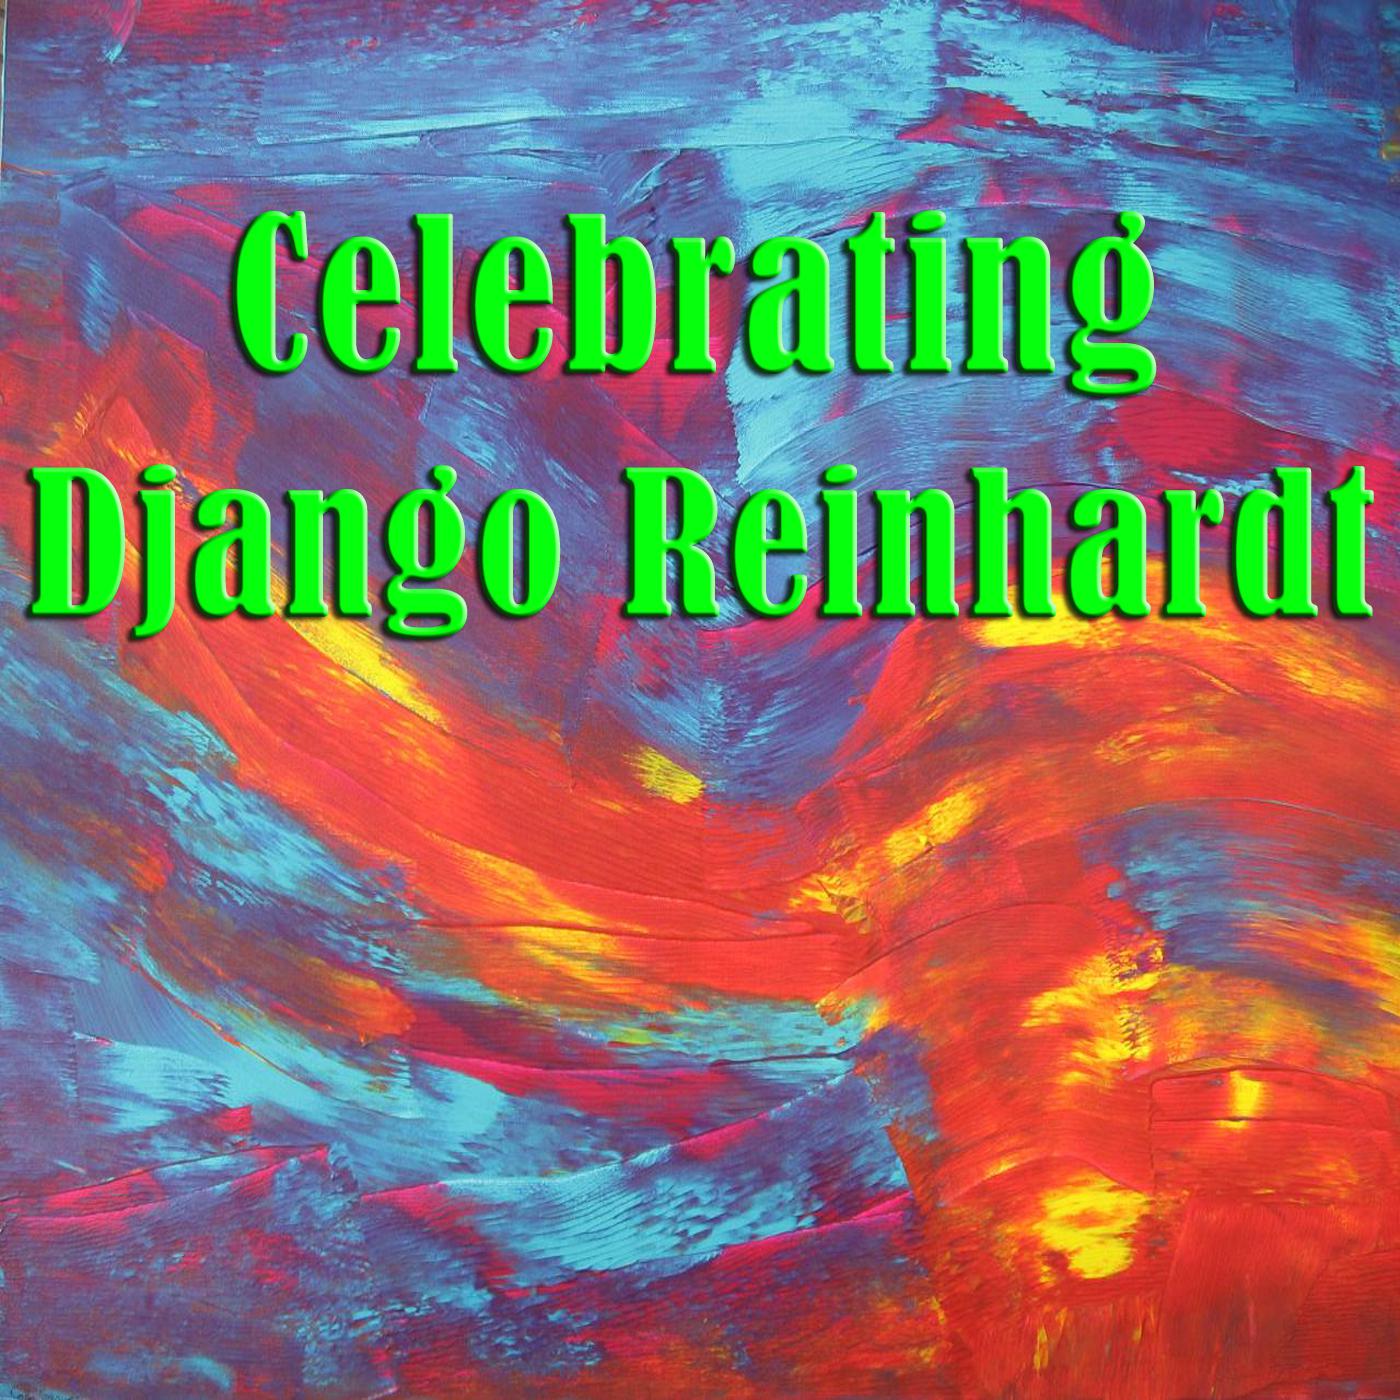 Celebrating DJango Reinhardt